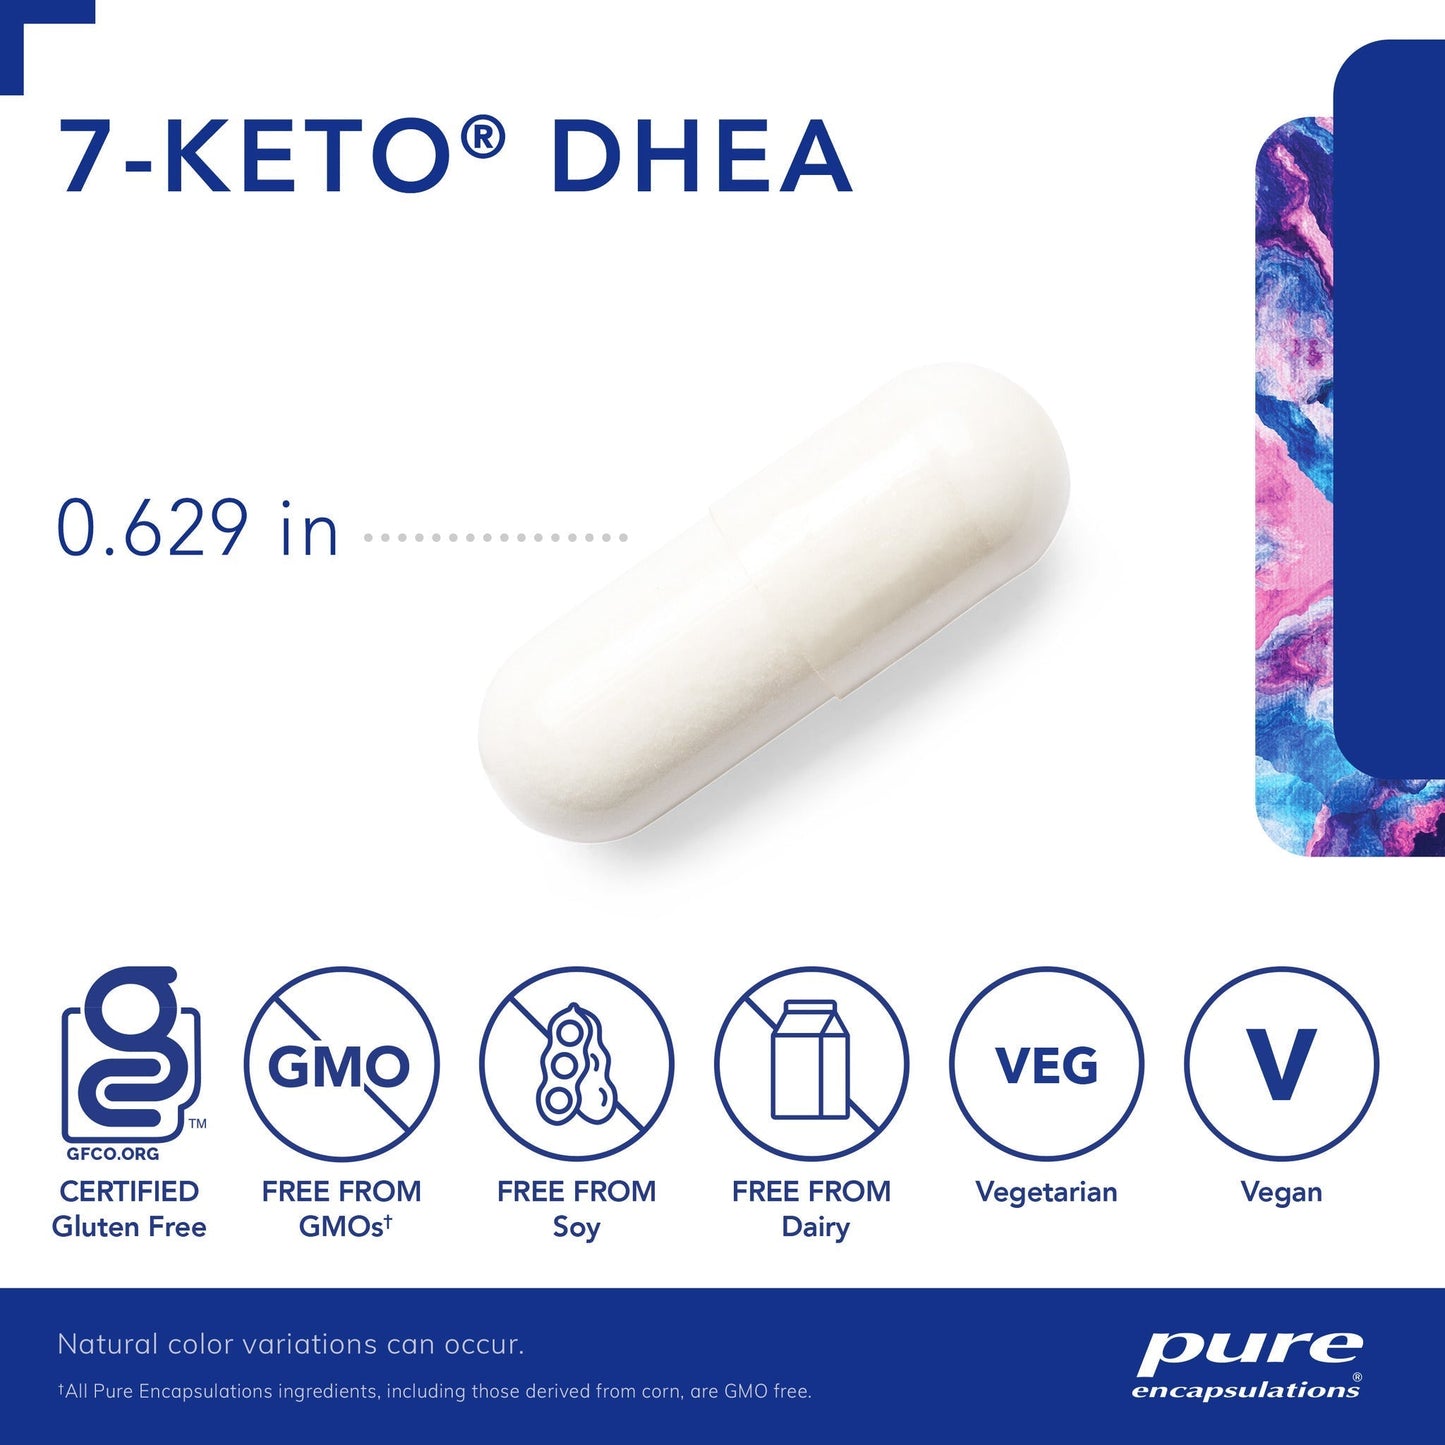 7 KETO DHEA 100 mg.